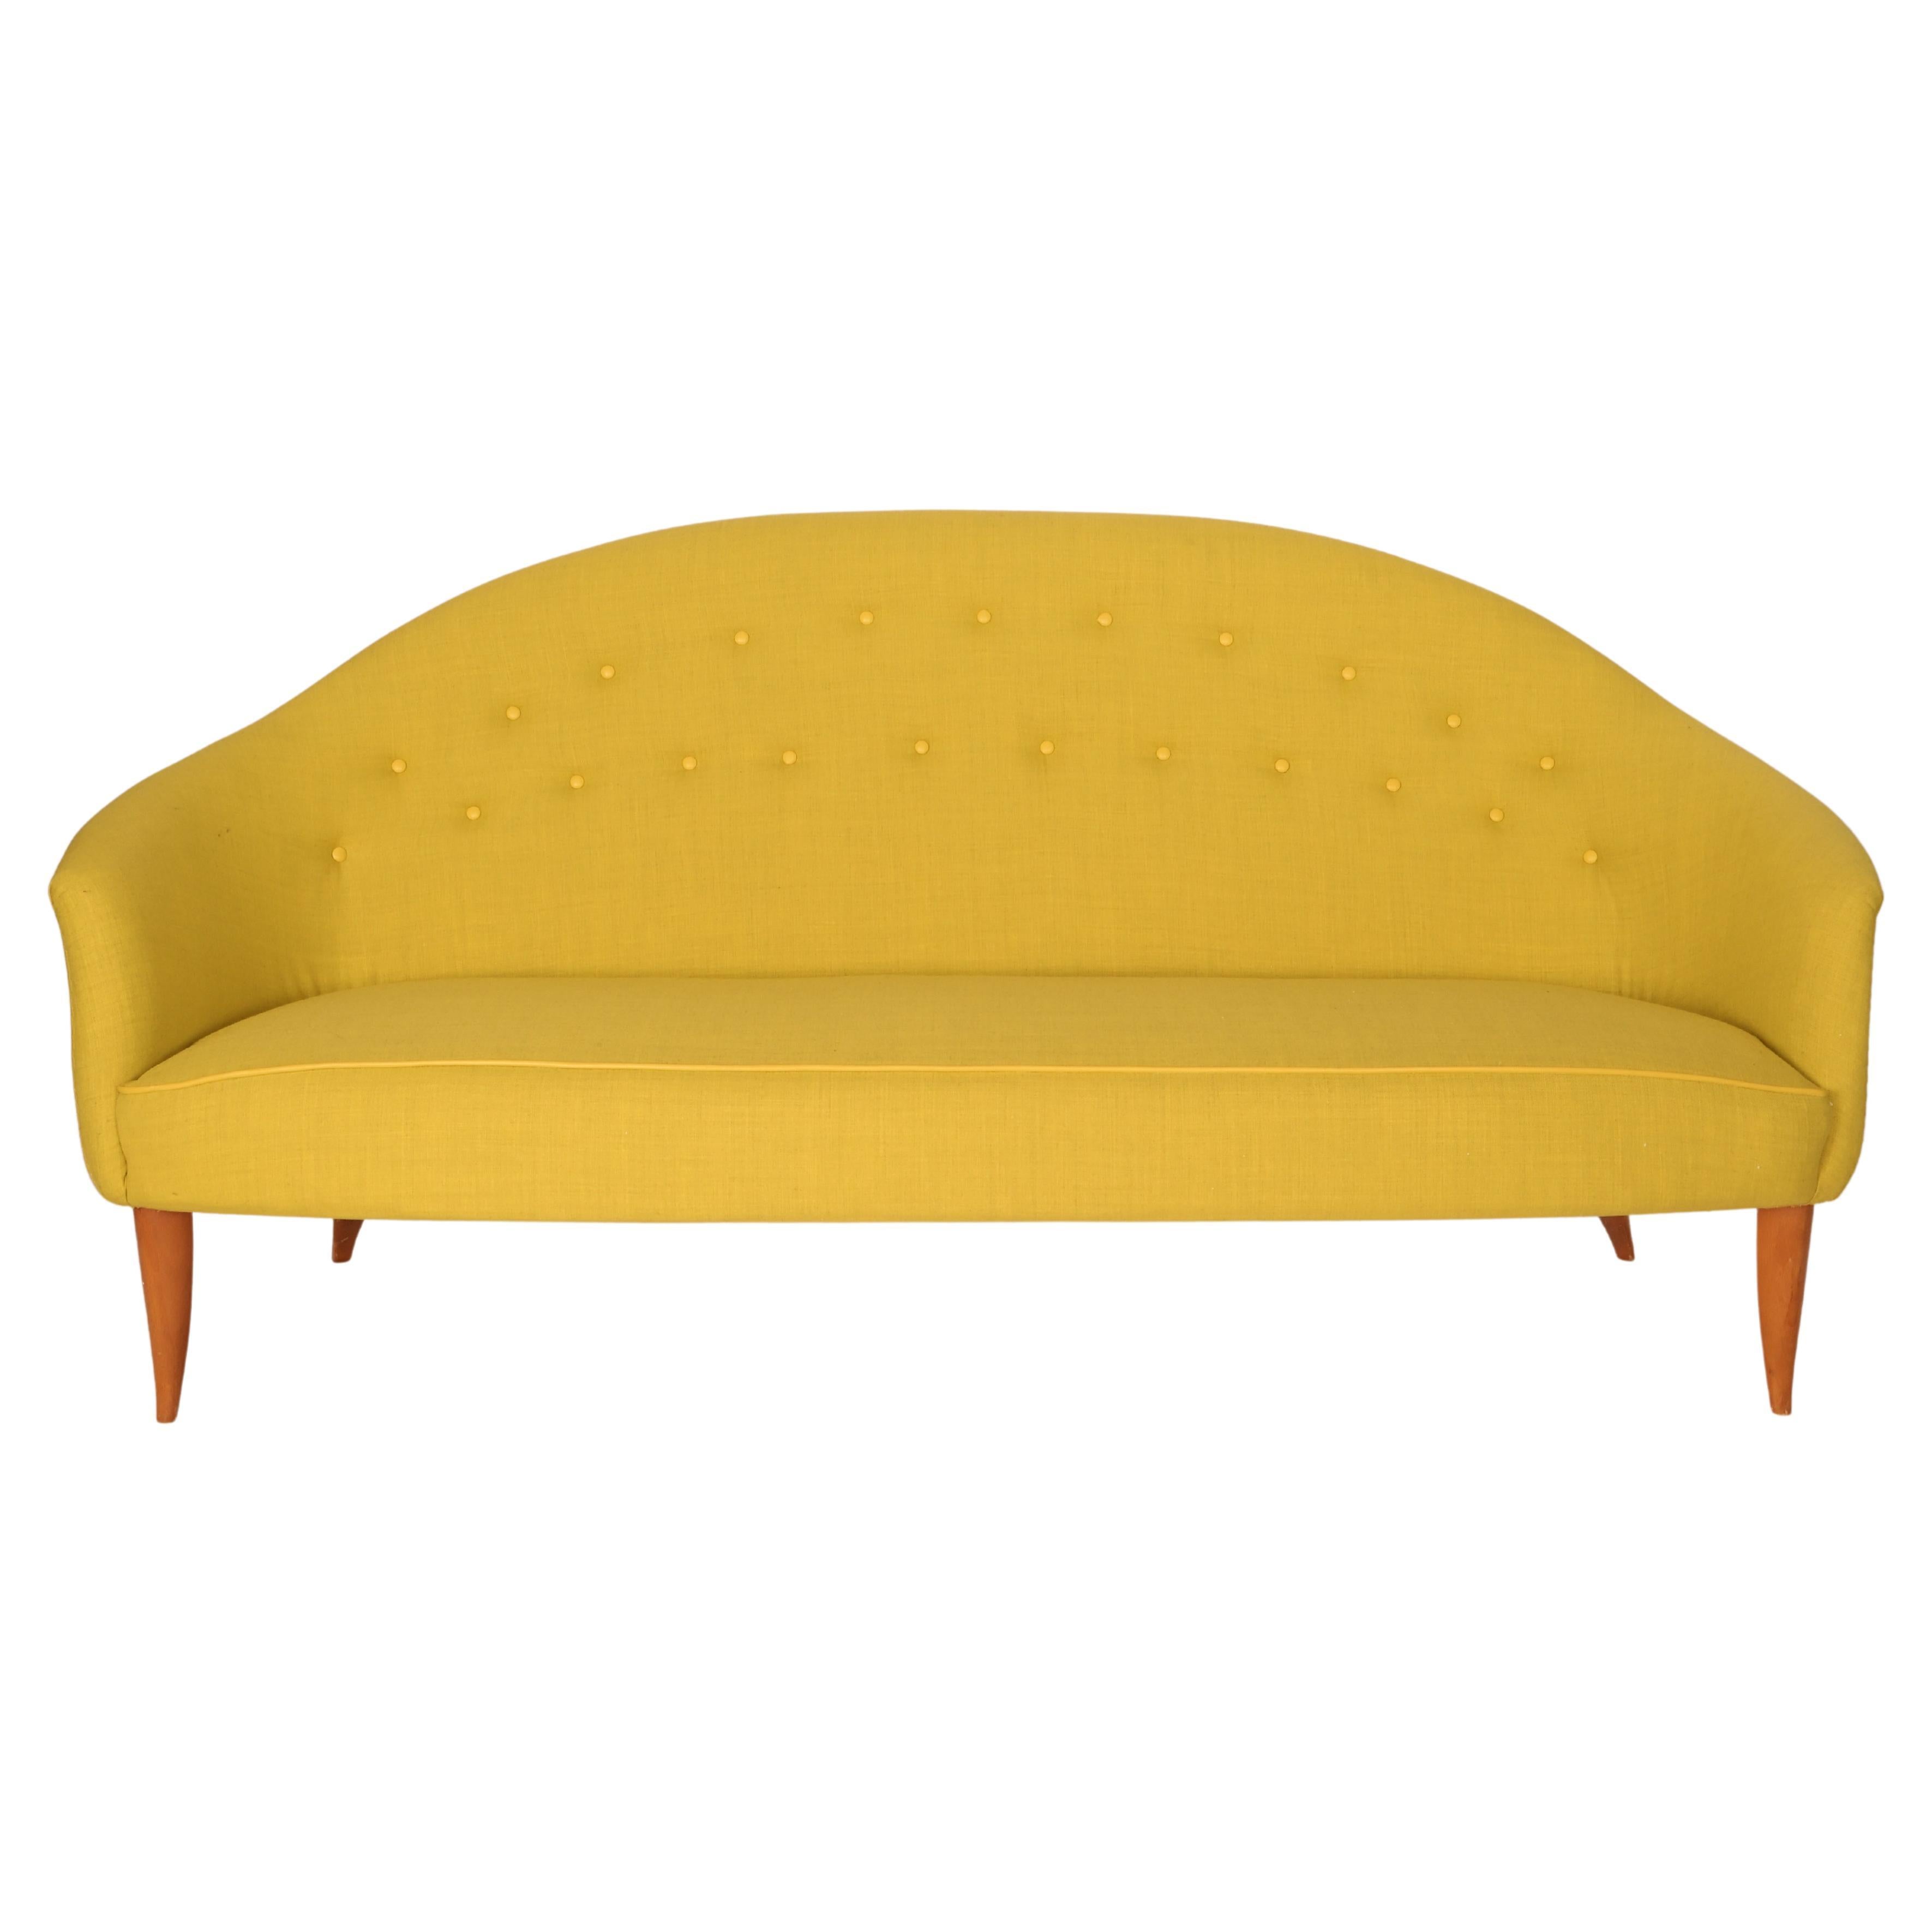 Swedish Modern "Paradise" Sofa designed by Kerstin Hörlin-Holmquist 